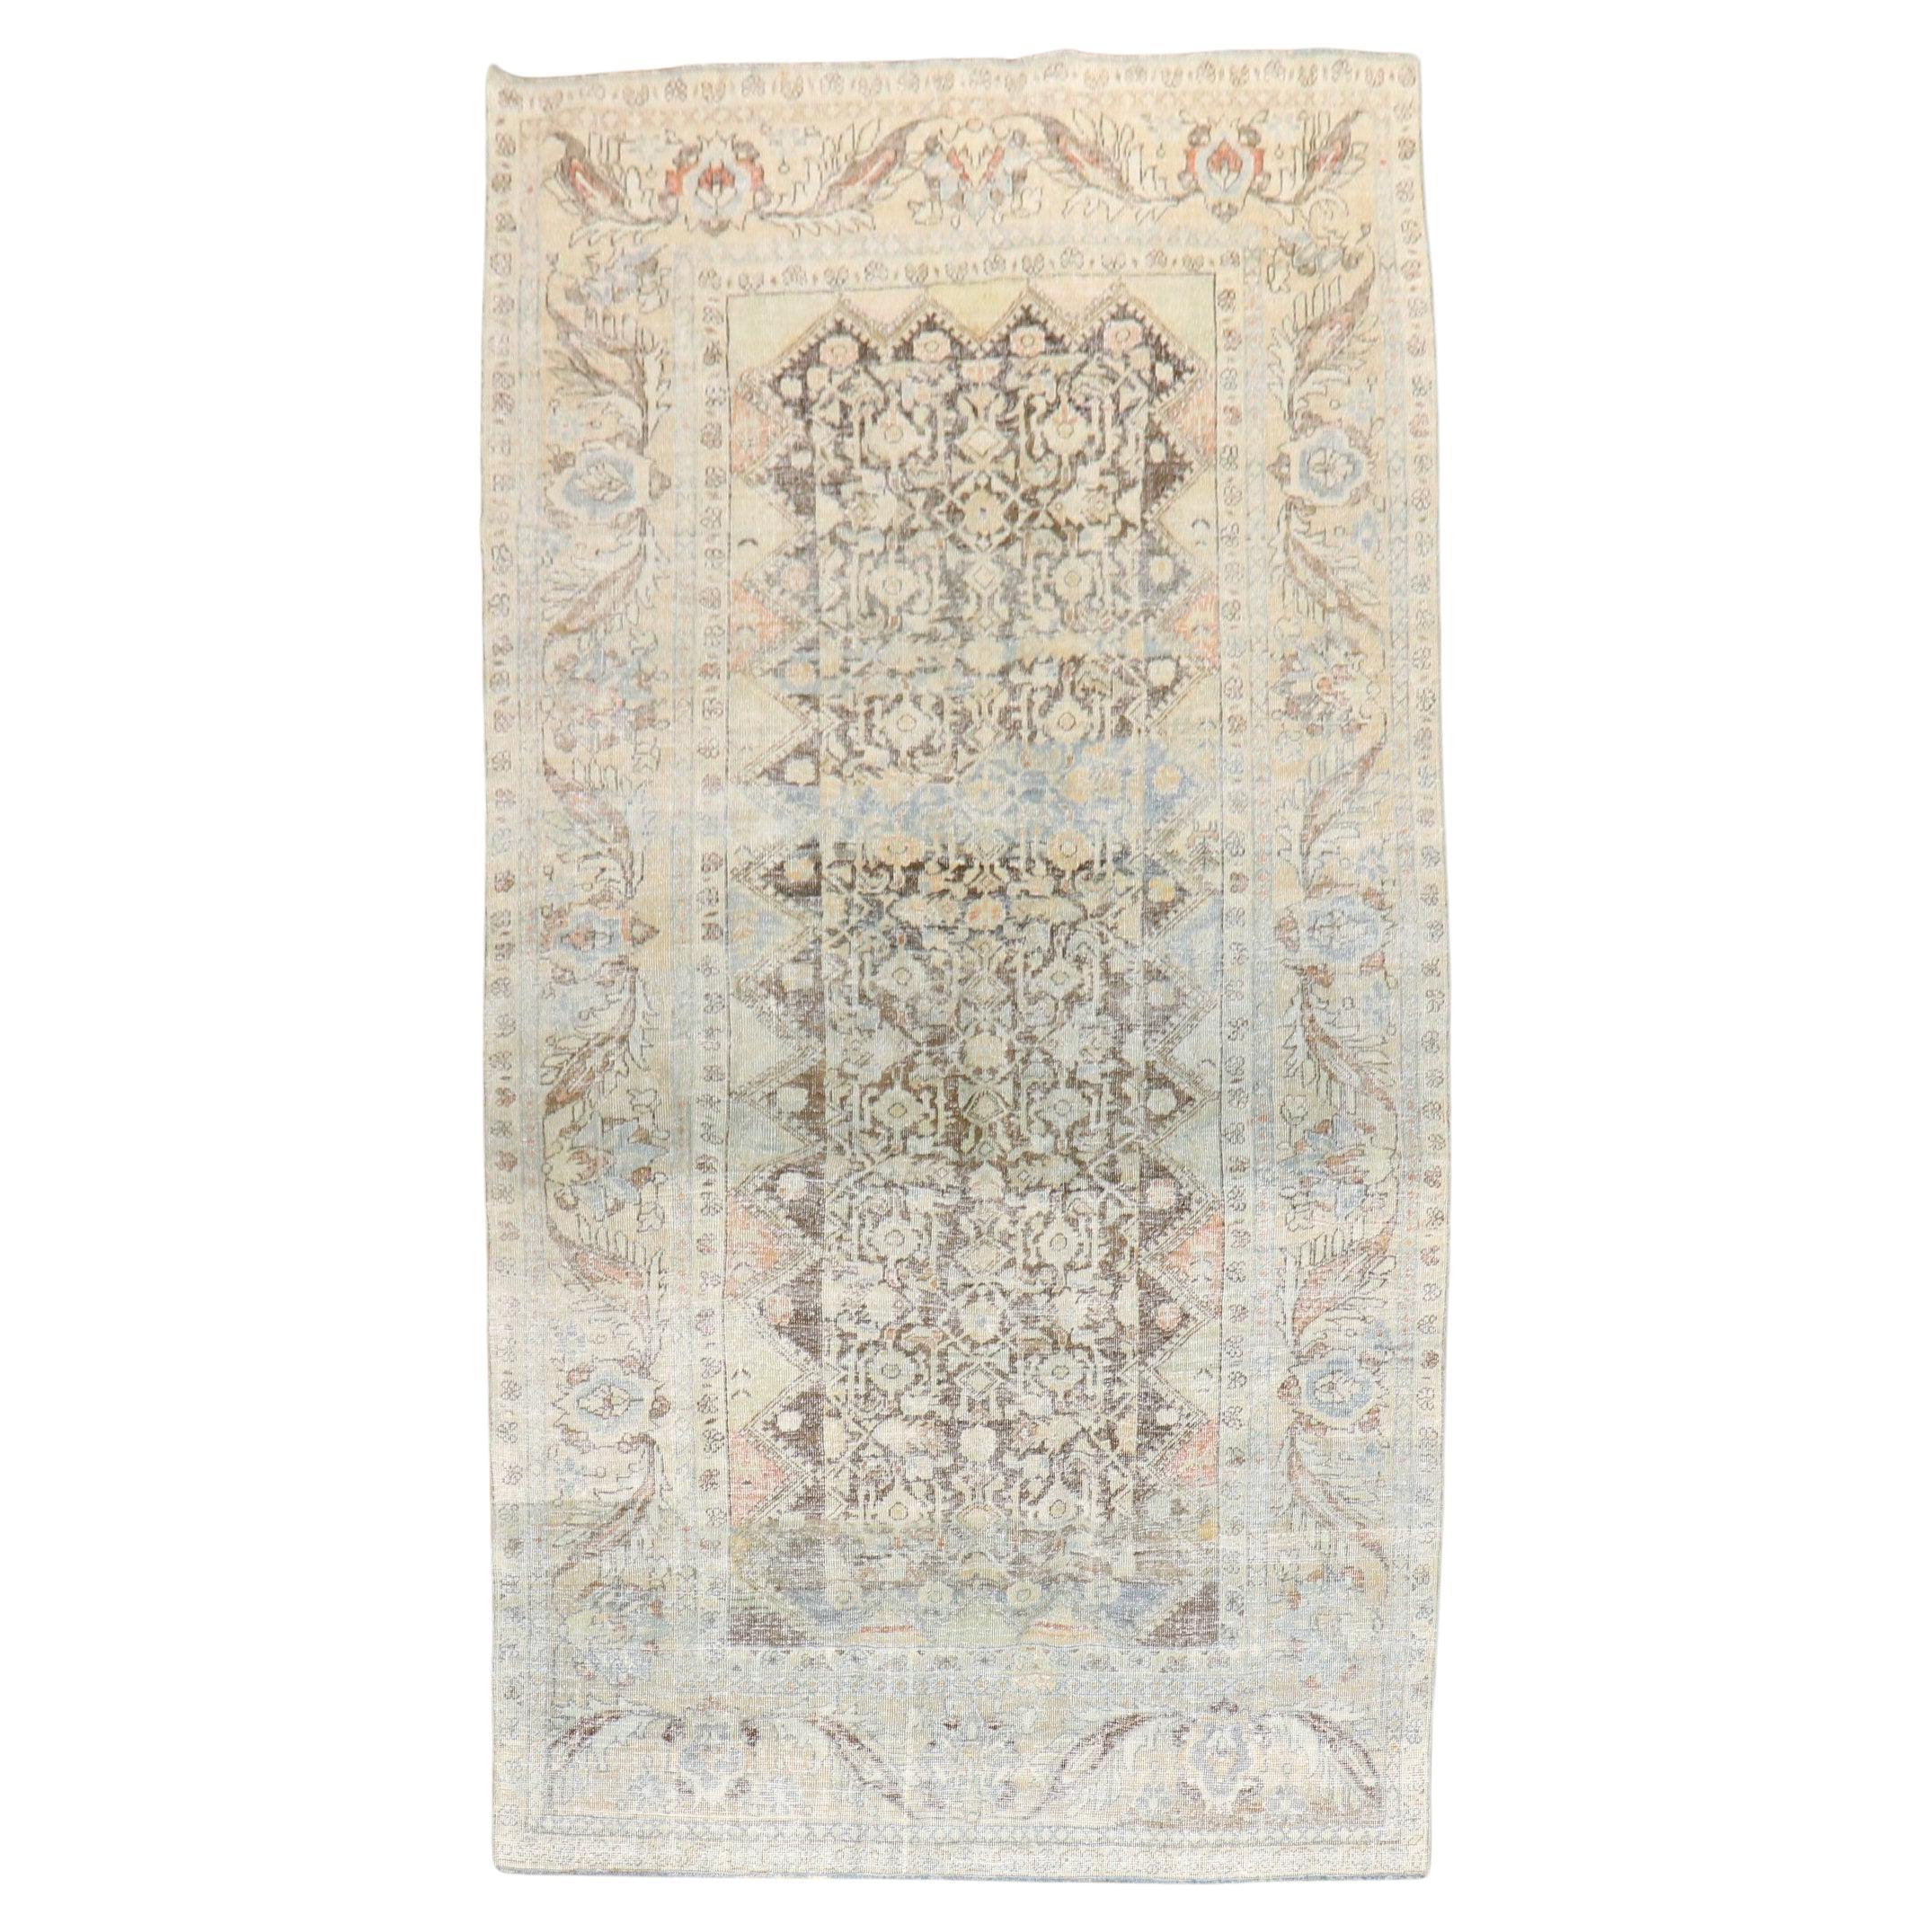 Tapis persan Mahal ancien porté de la collection Zabihi